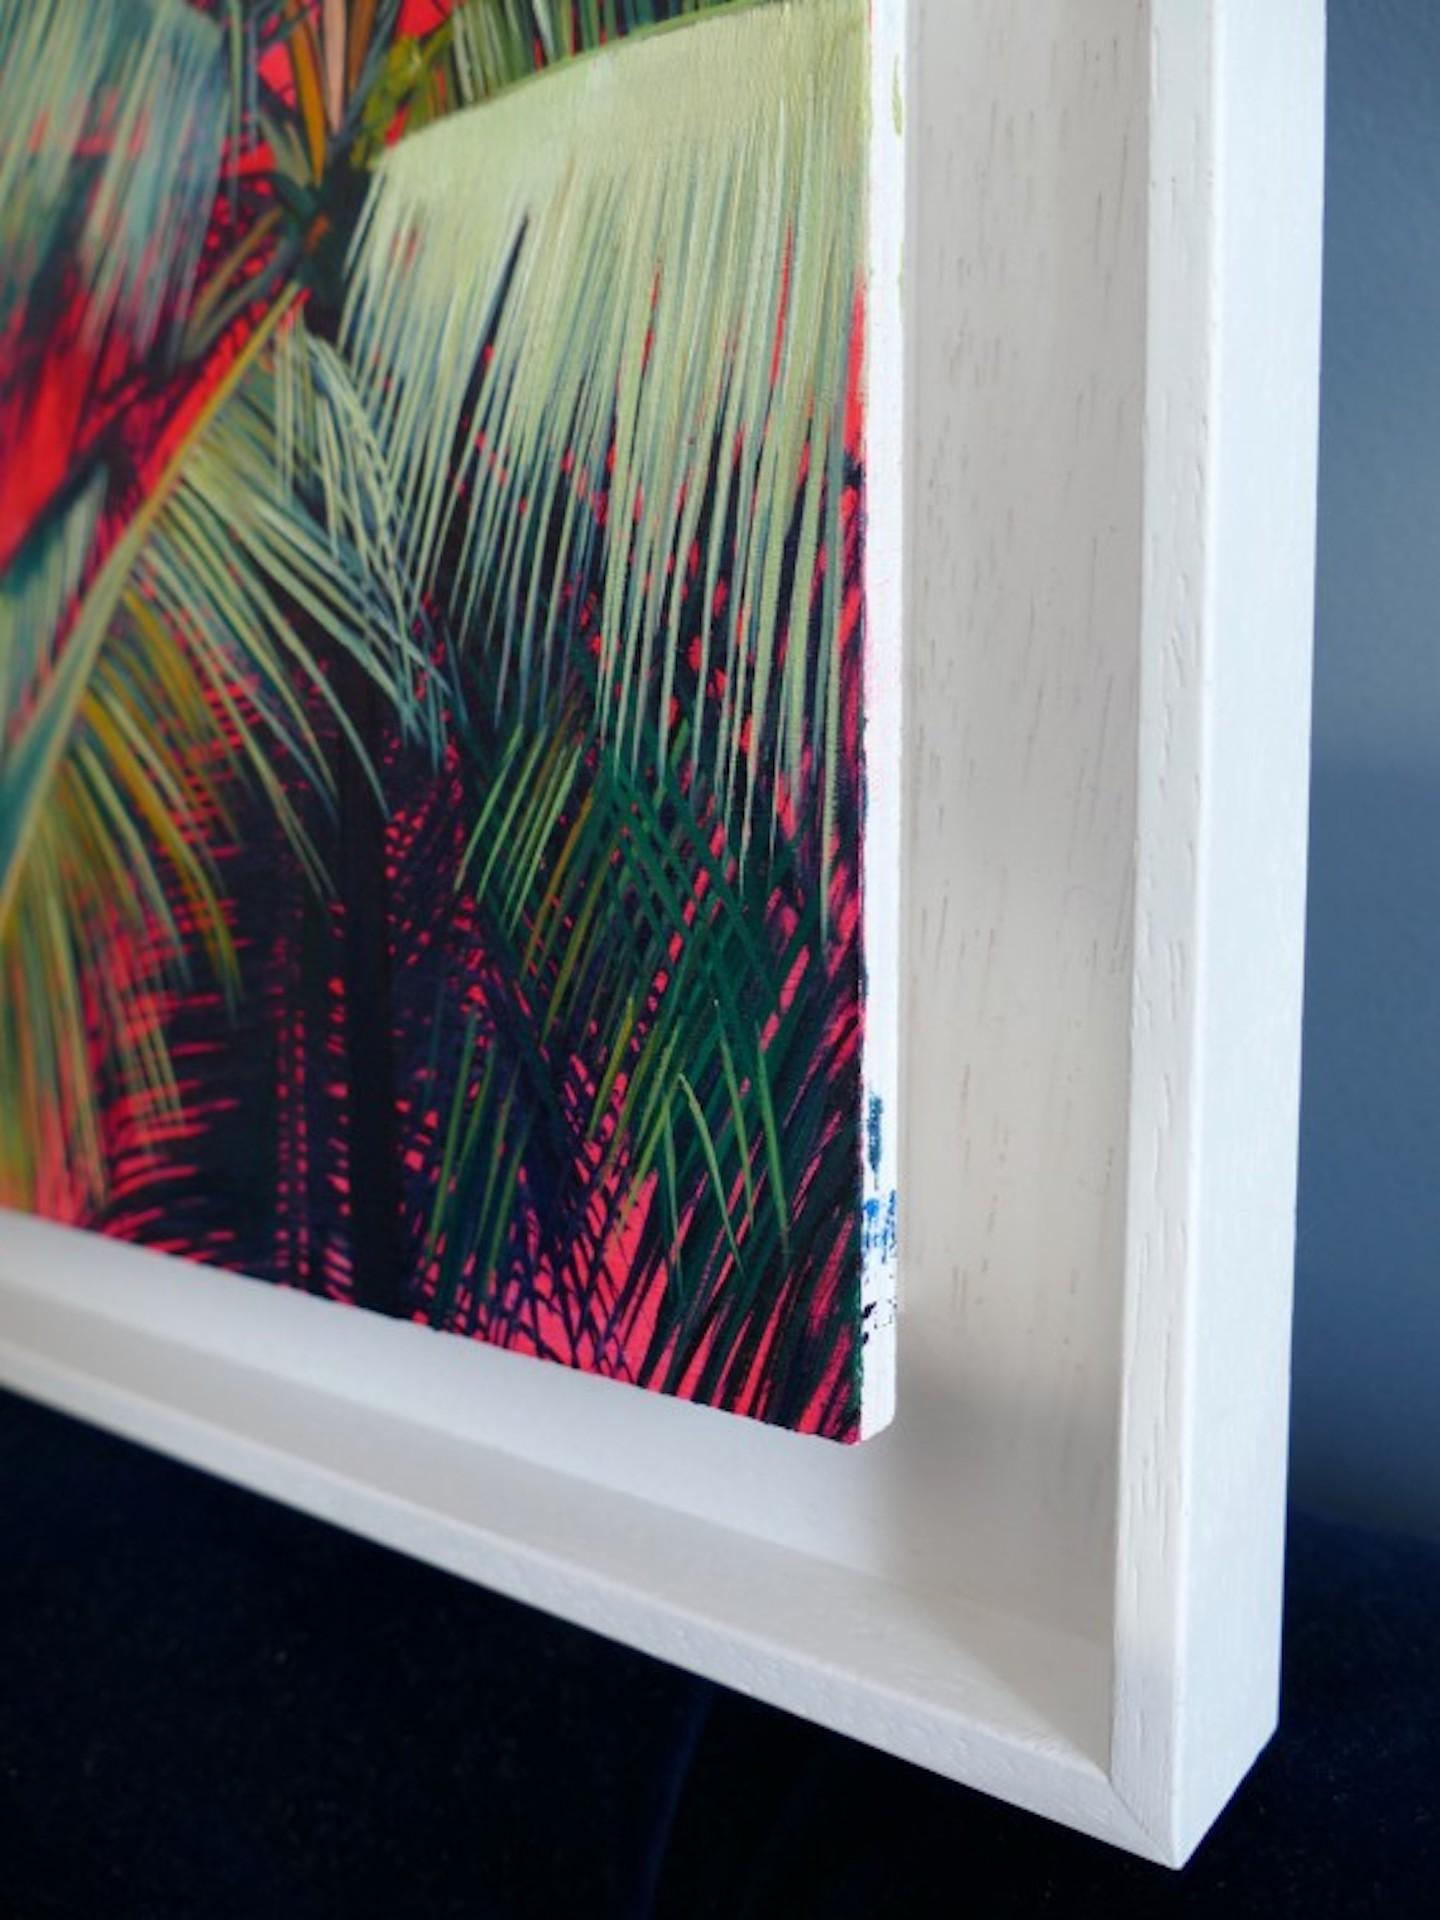 Alanna Eakin, Pipa, Palm Tree Art, Contemporary Art, Original Painting For Sale 1